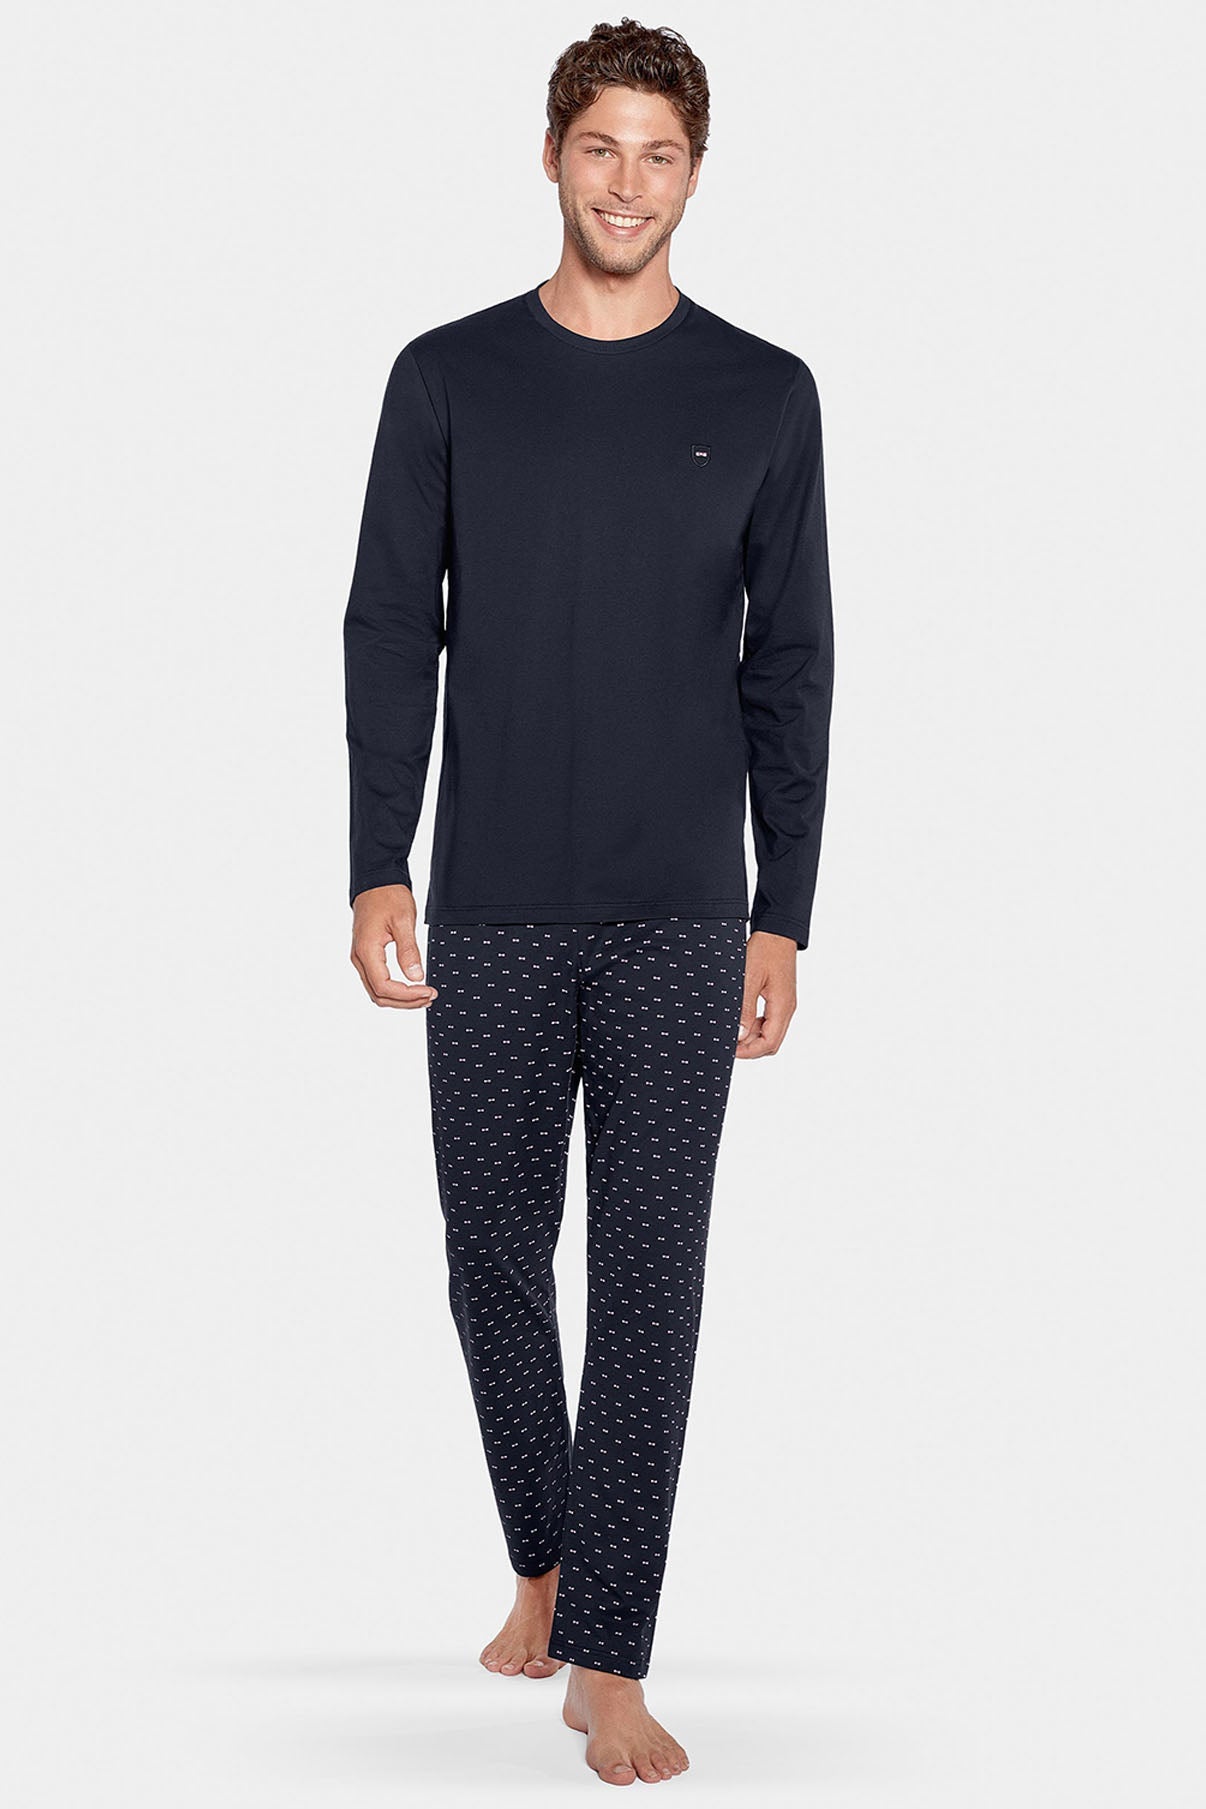 Pyjama long marine à micro motifs en jersey coton - Image 1